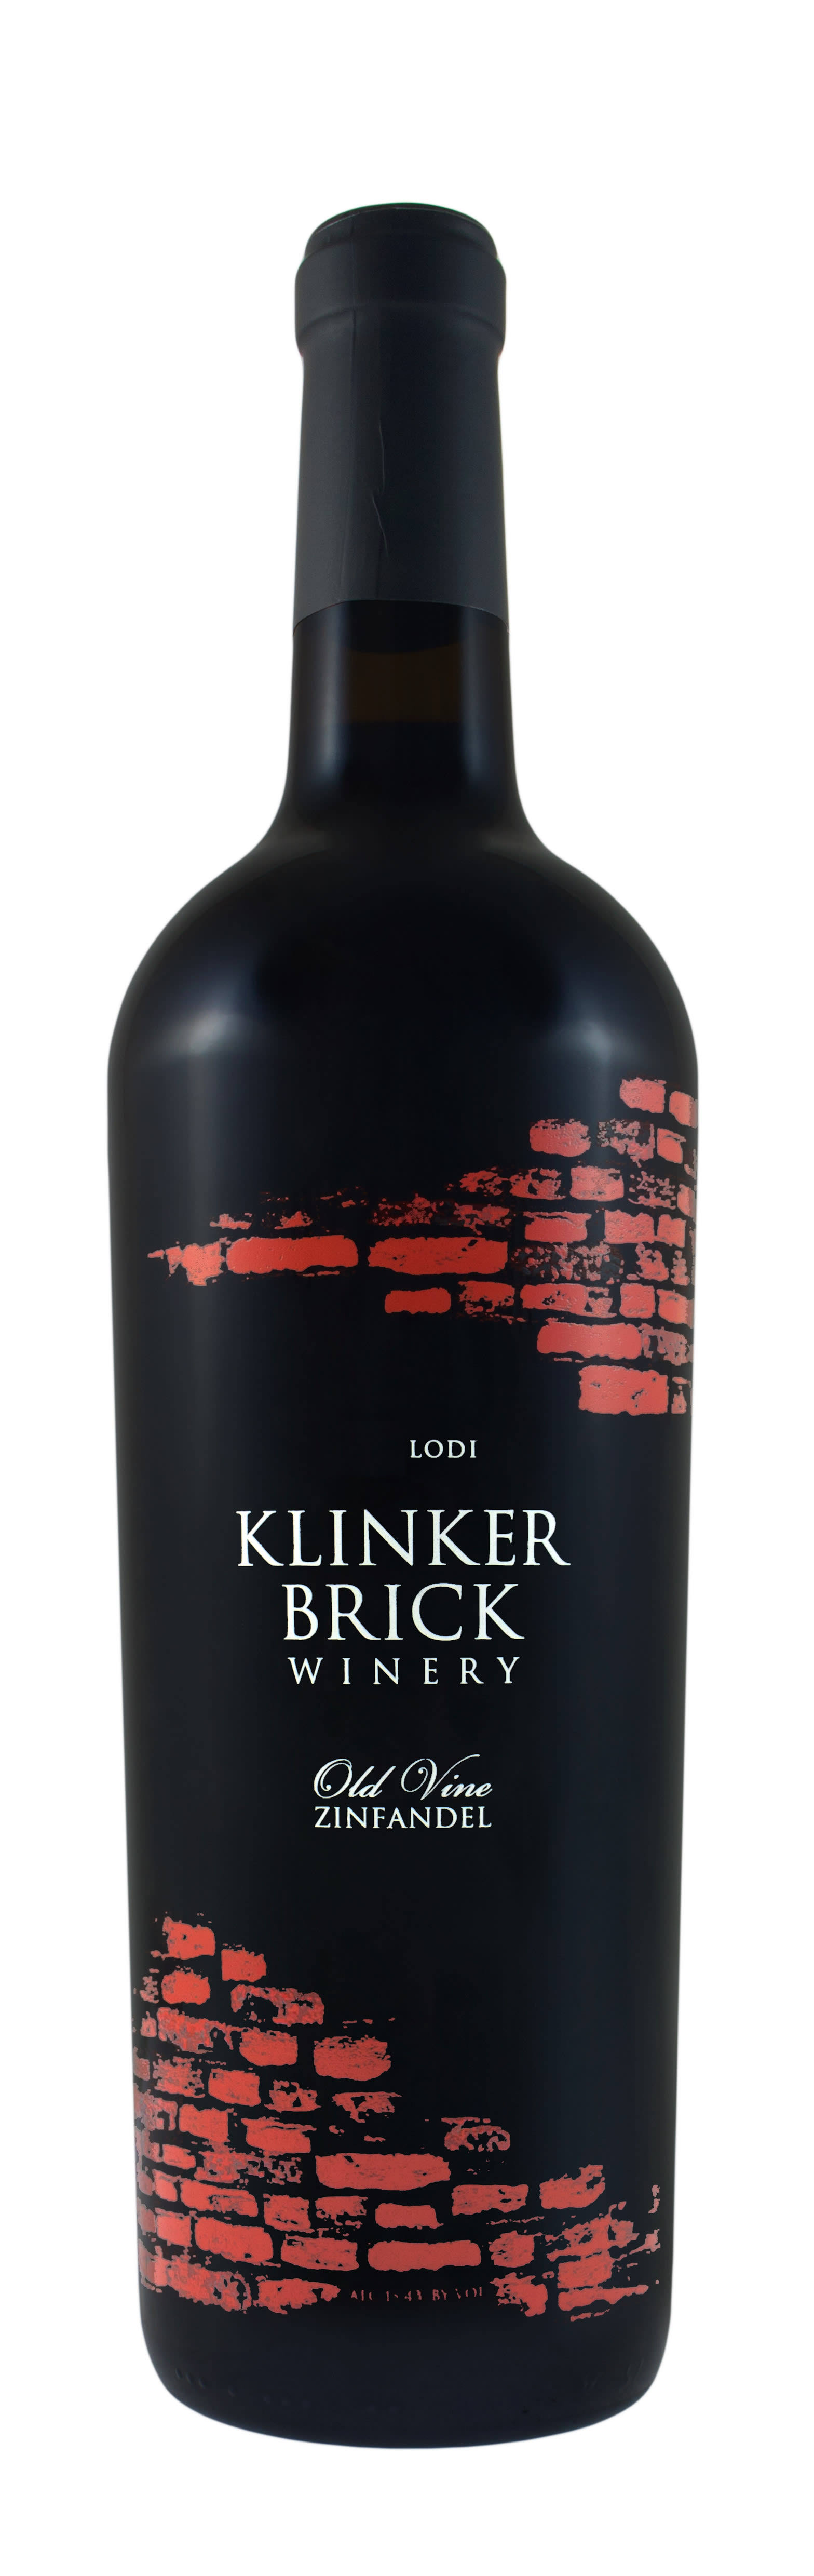 Klinker Brick Zinfandel Old Vine 2008 - 750ml